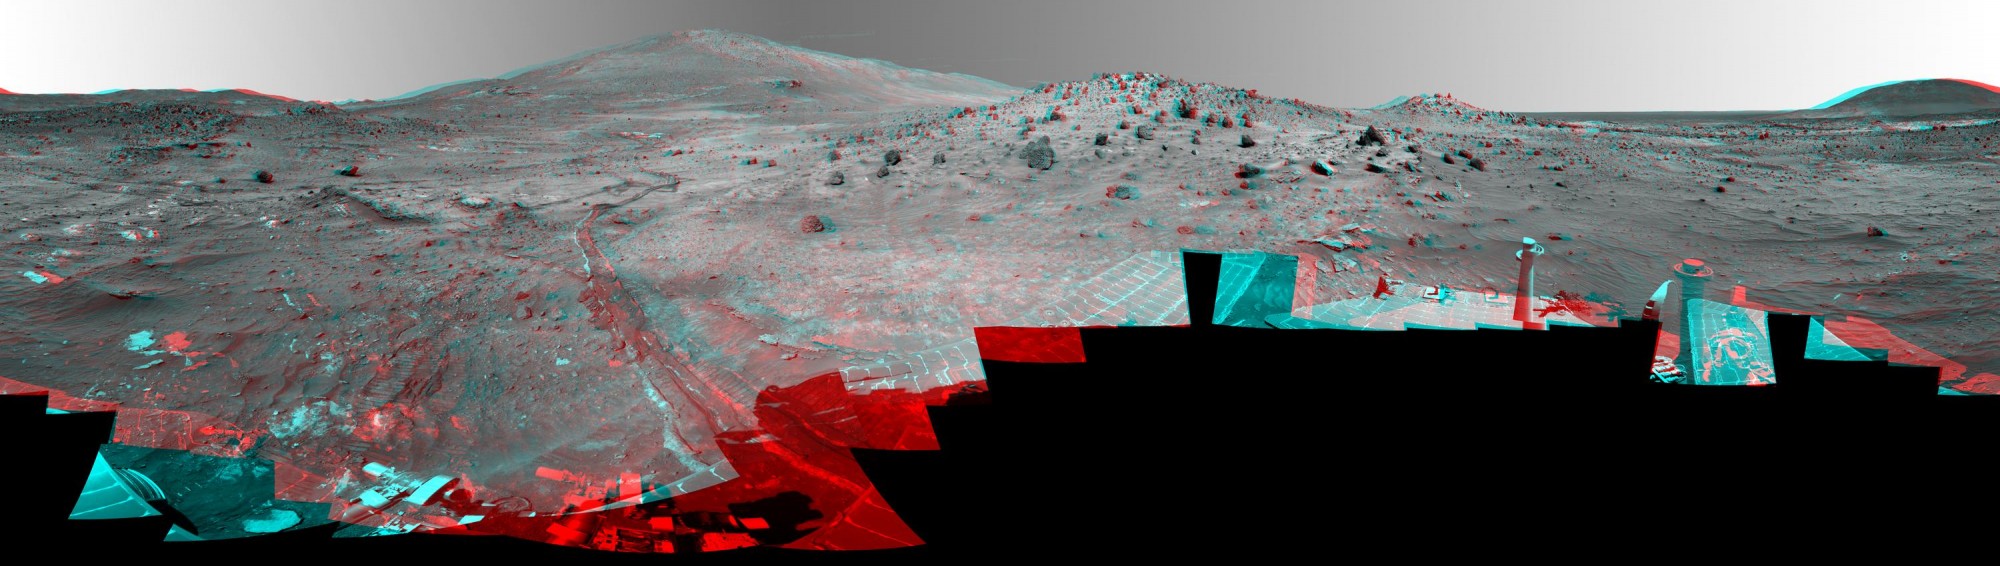 McMurdo panorama 3D